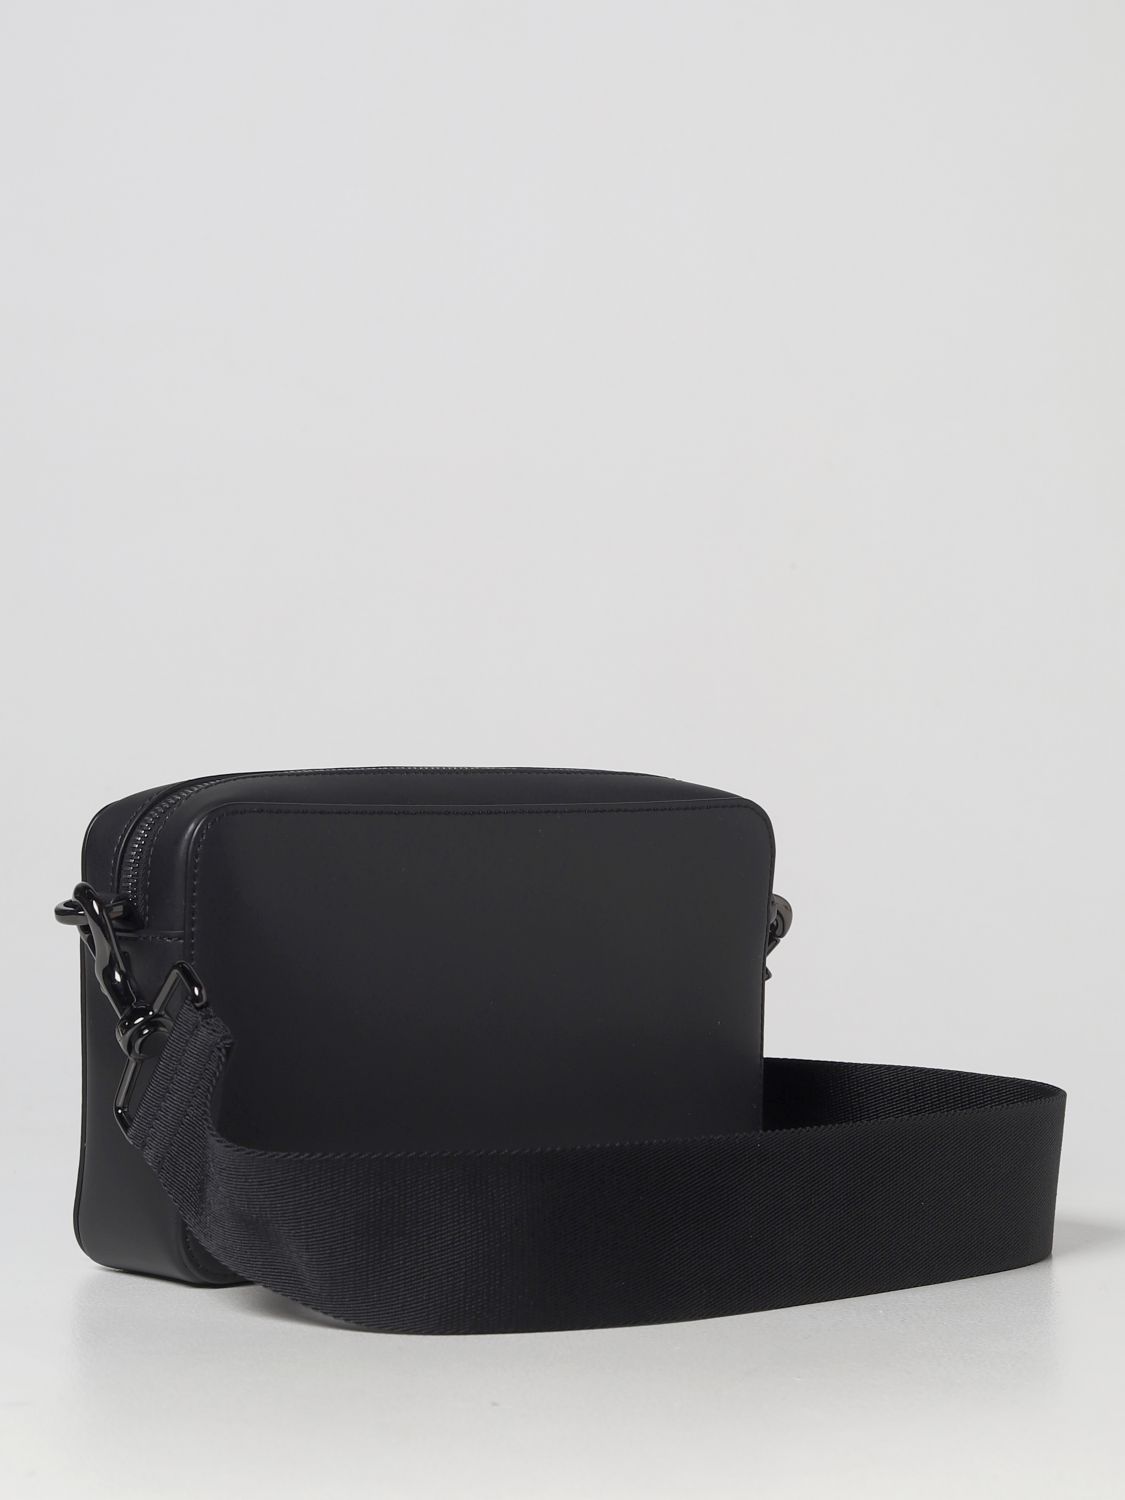 Valentino Handbags men's shoulder bag color black model Sky article VBS43410